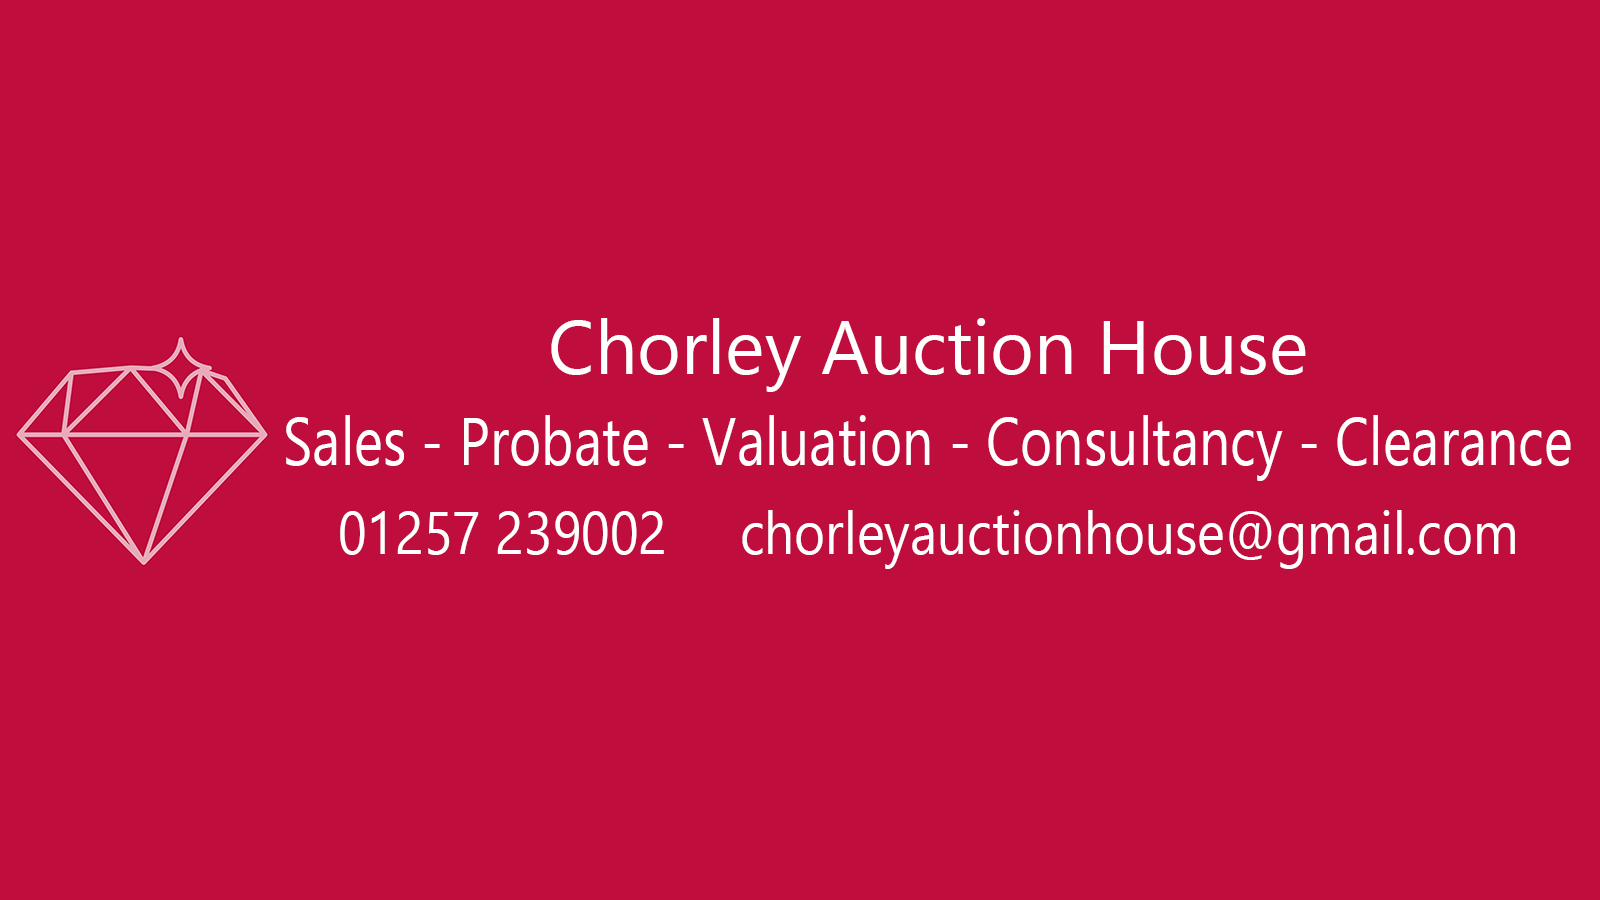 Chorley Auction House Ltd